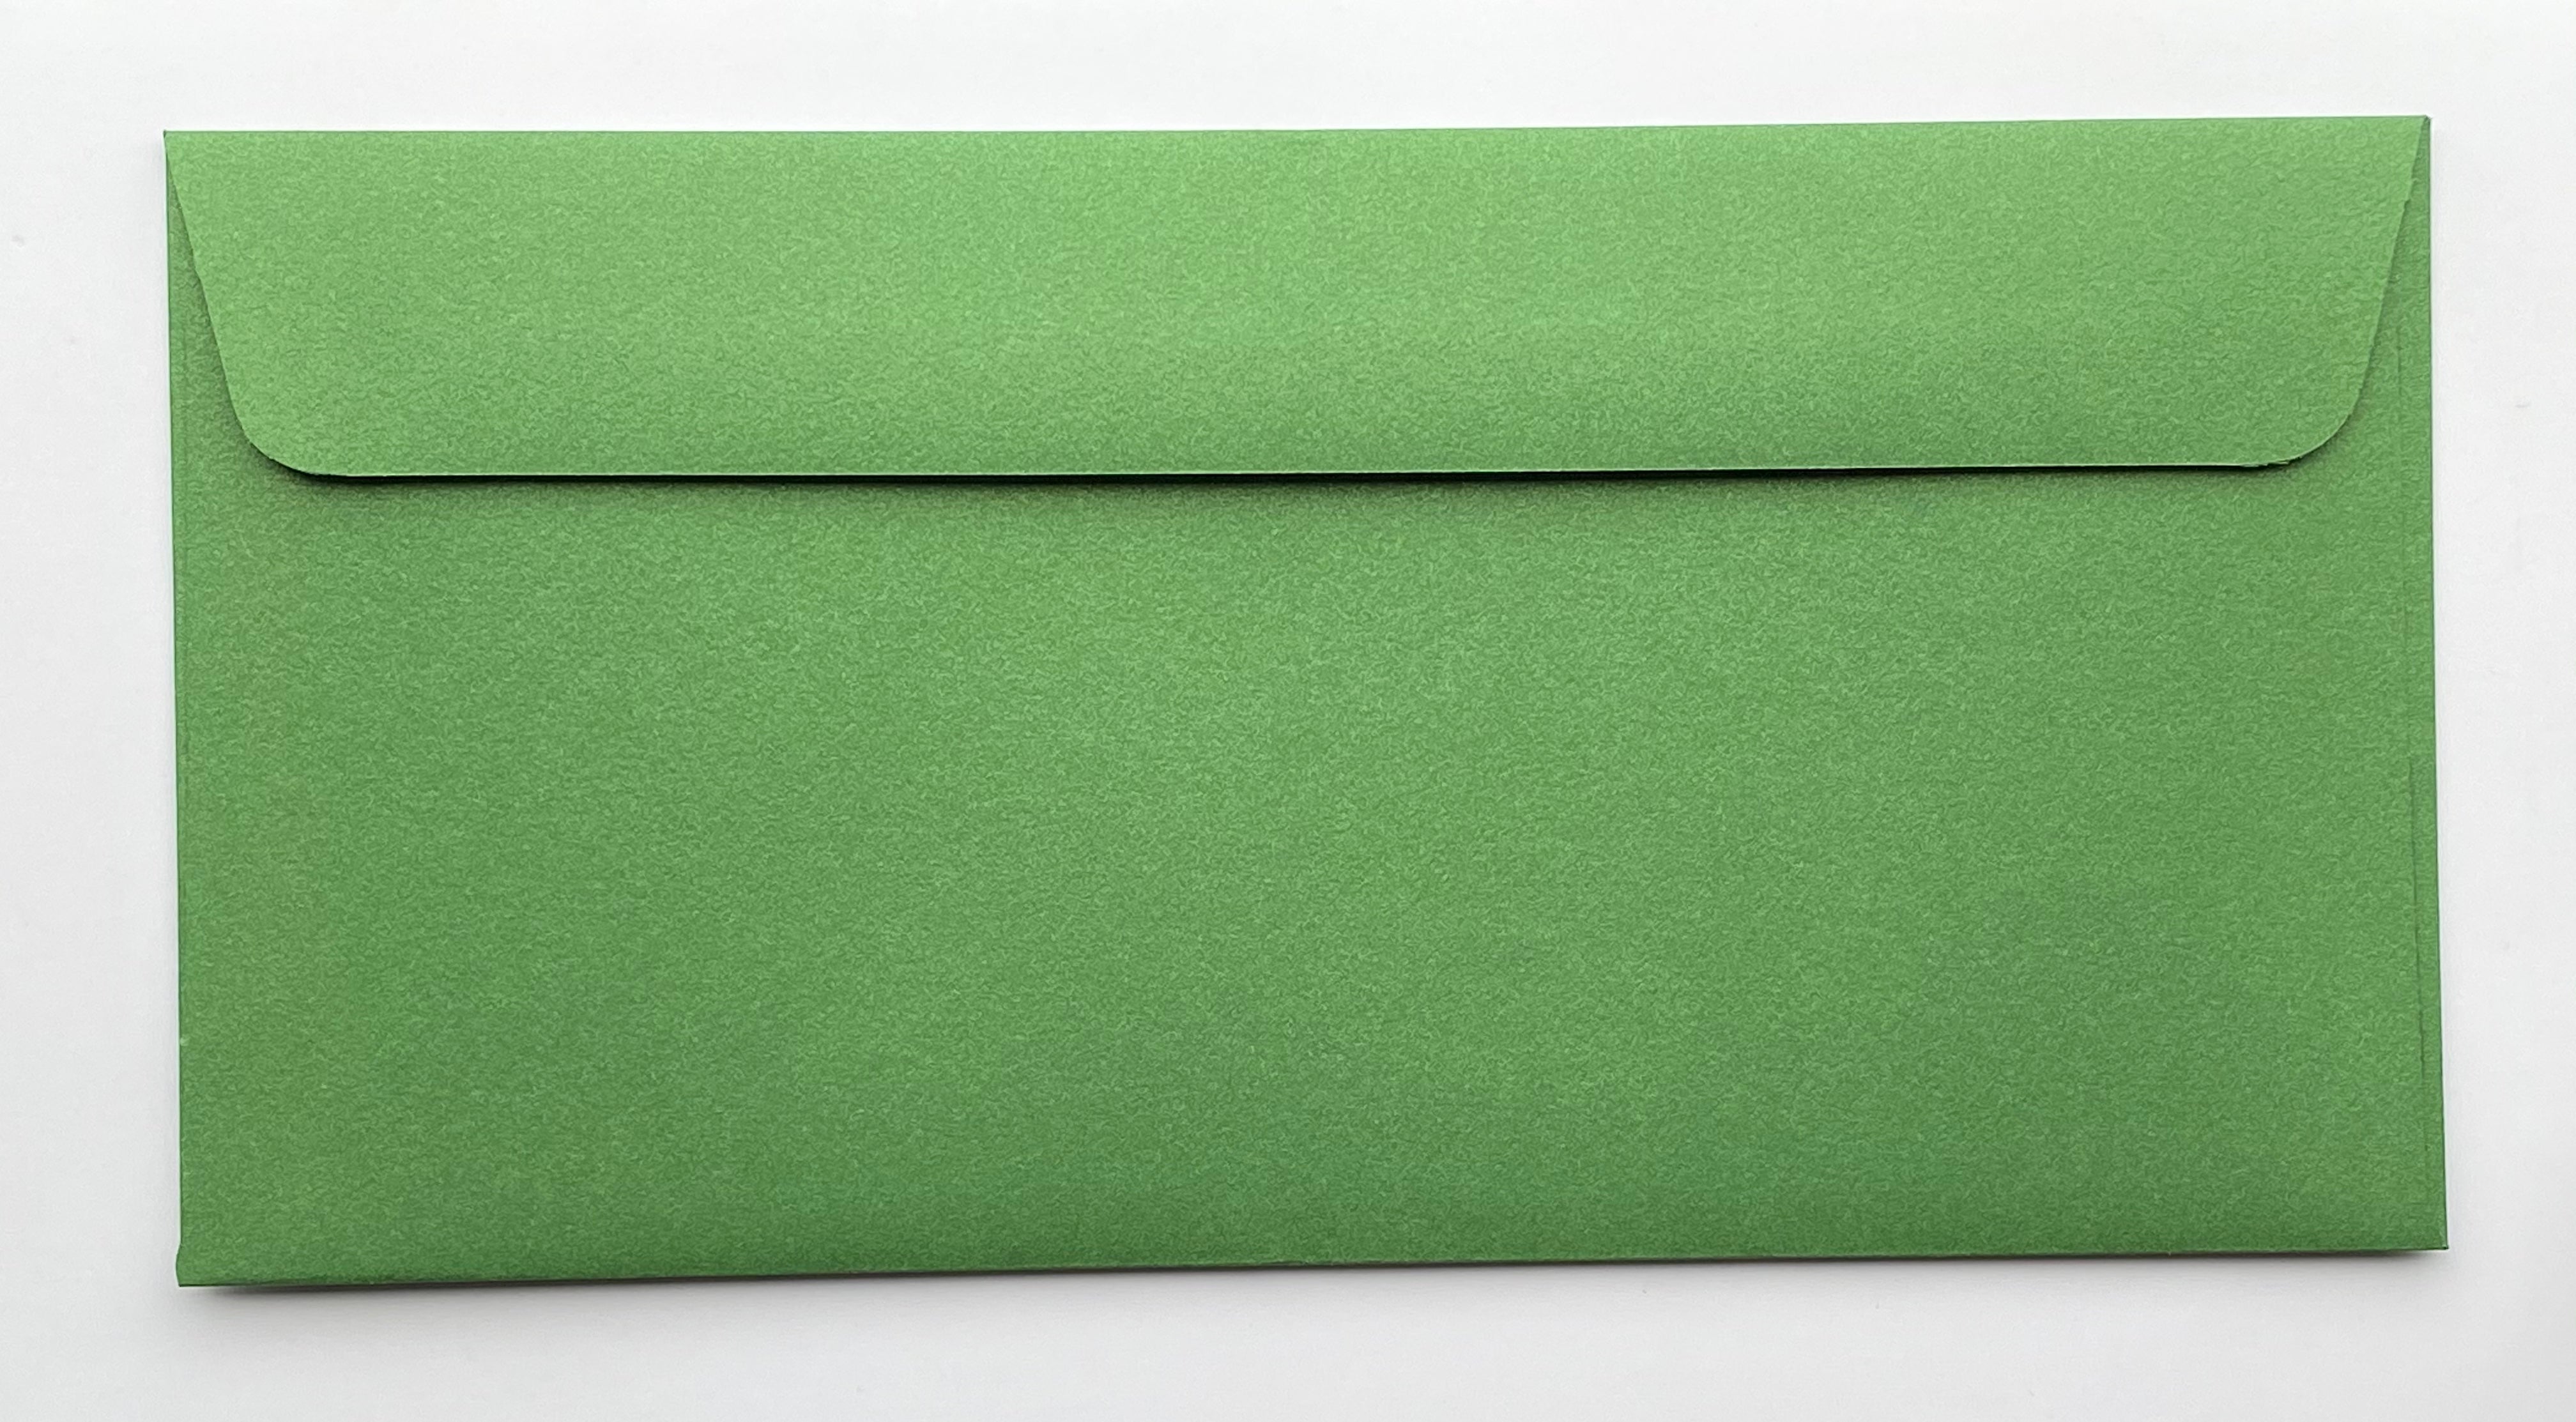 DLE metallic envelopes